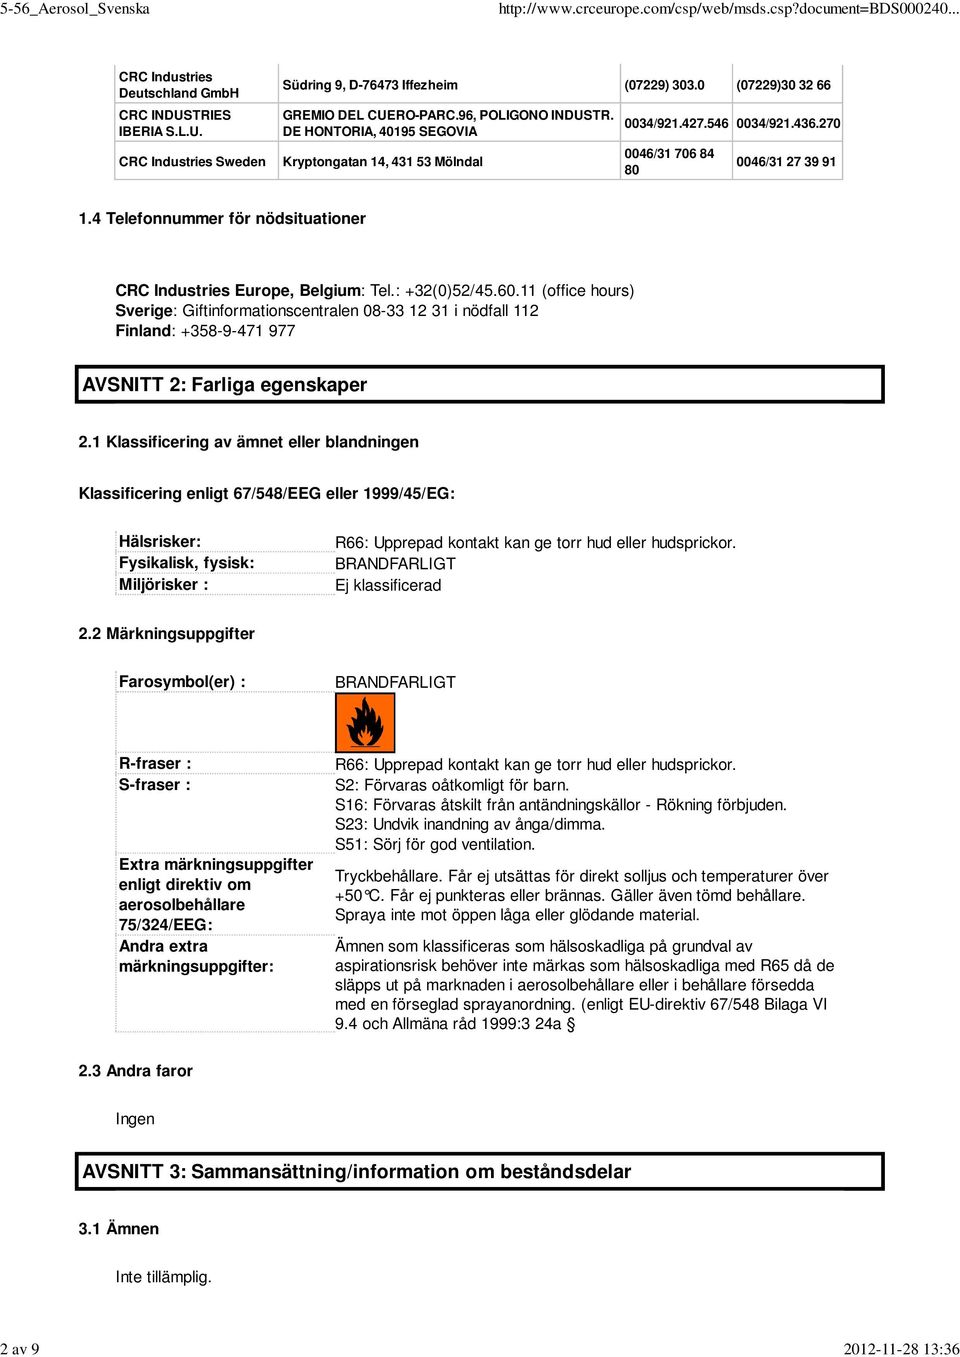 4 Telefonnummer för nödsituationer CRC Industries Europe, Belgium: Tel.: +32(0)52/45.60.